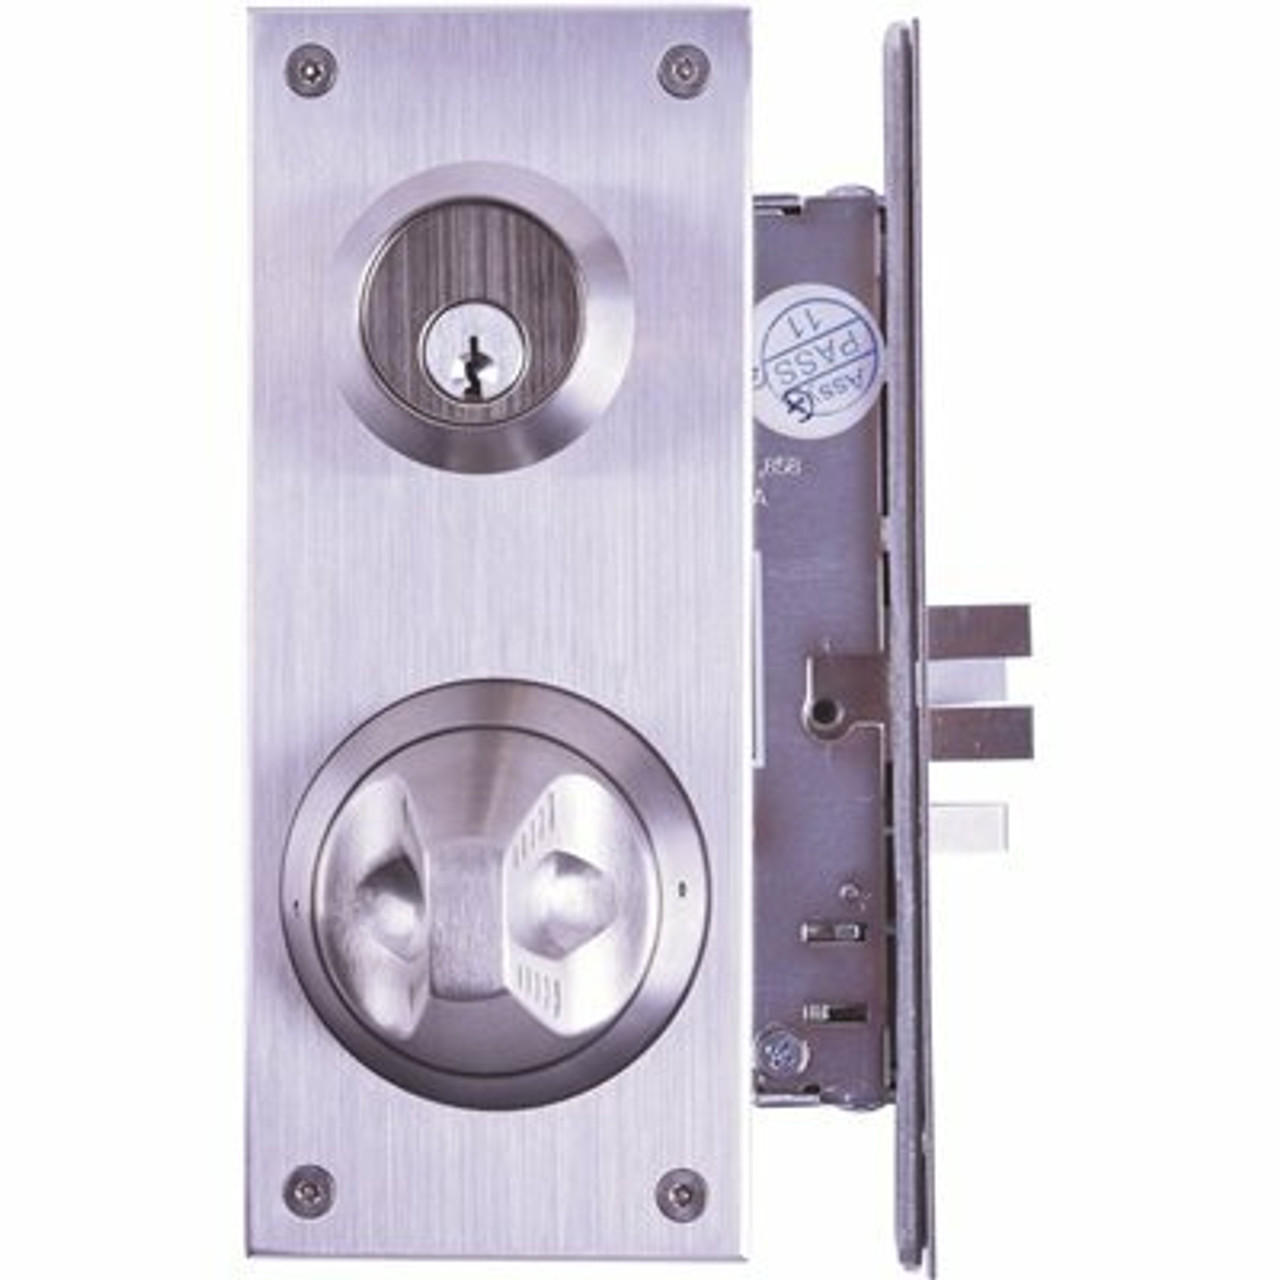 Townsteel Ligature Resistant Satin Stainless Steel Mortise Lock Escutcheon Knob Trim - 309015622